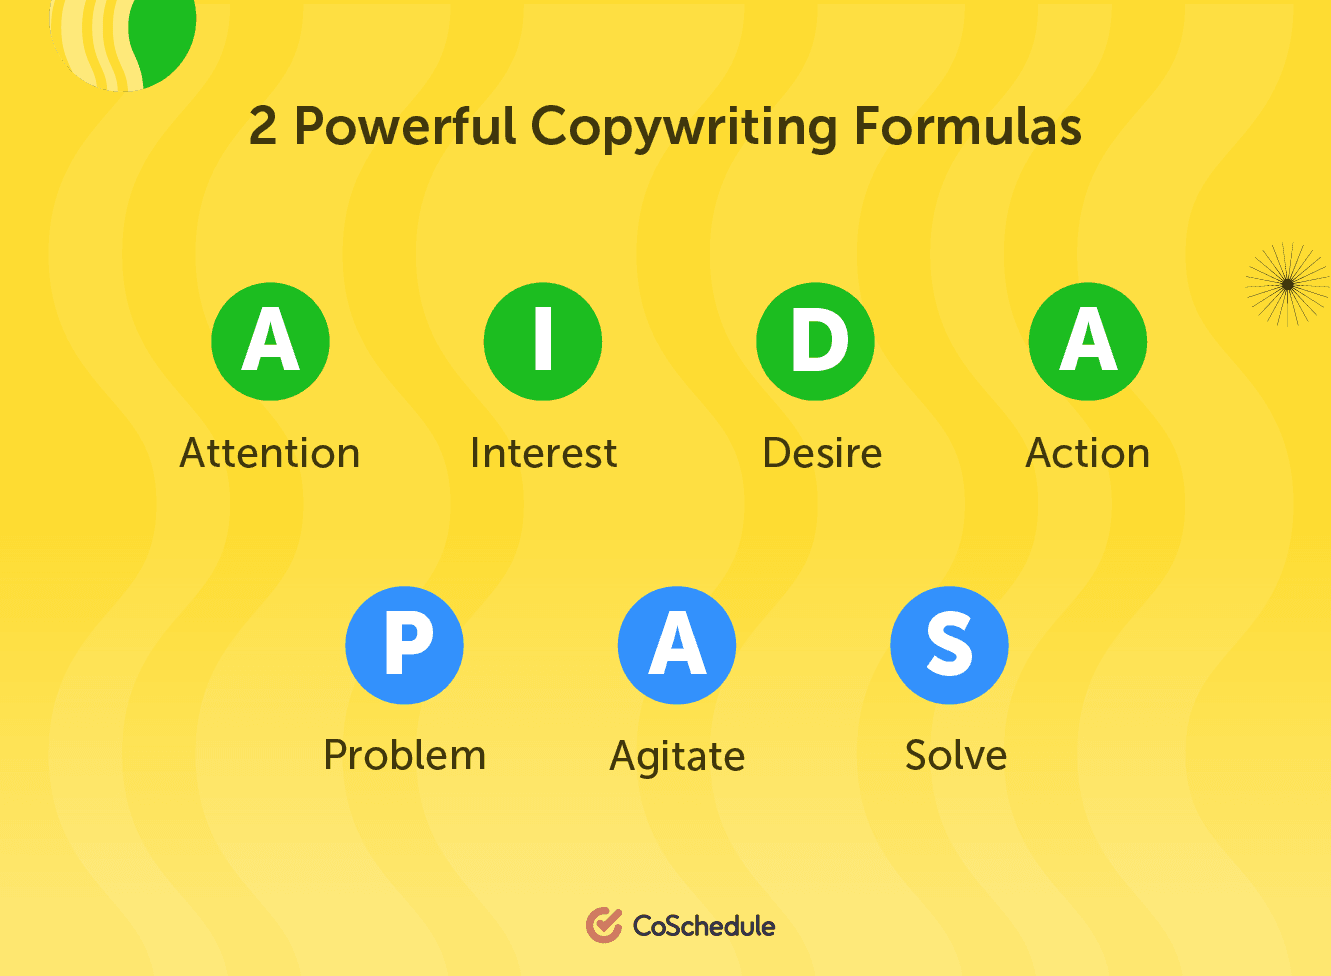 2 powerful copywriting formulas